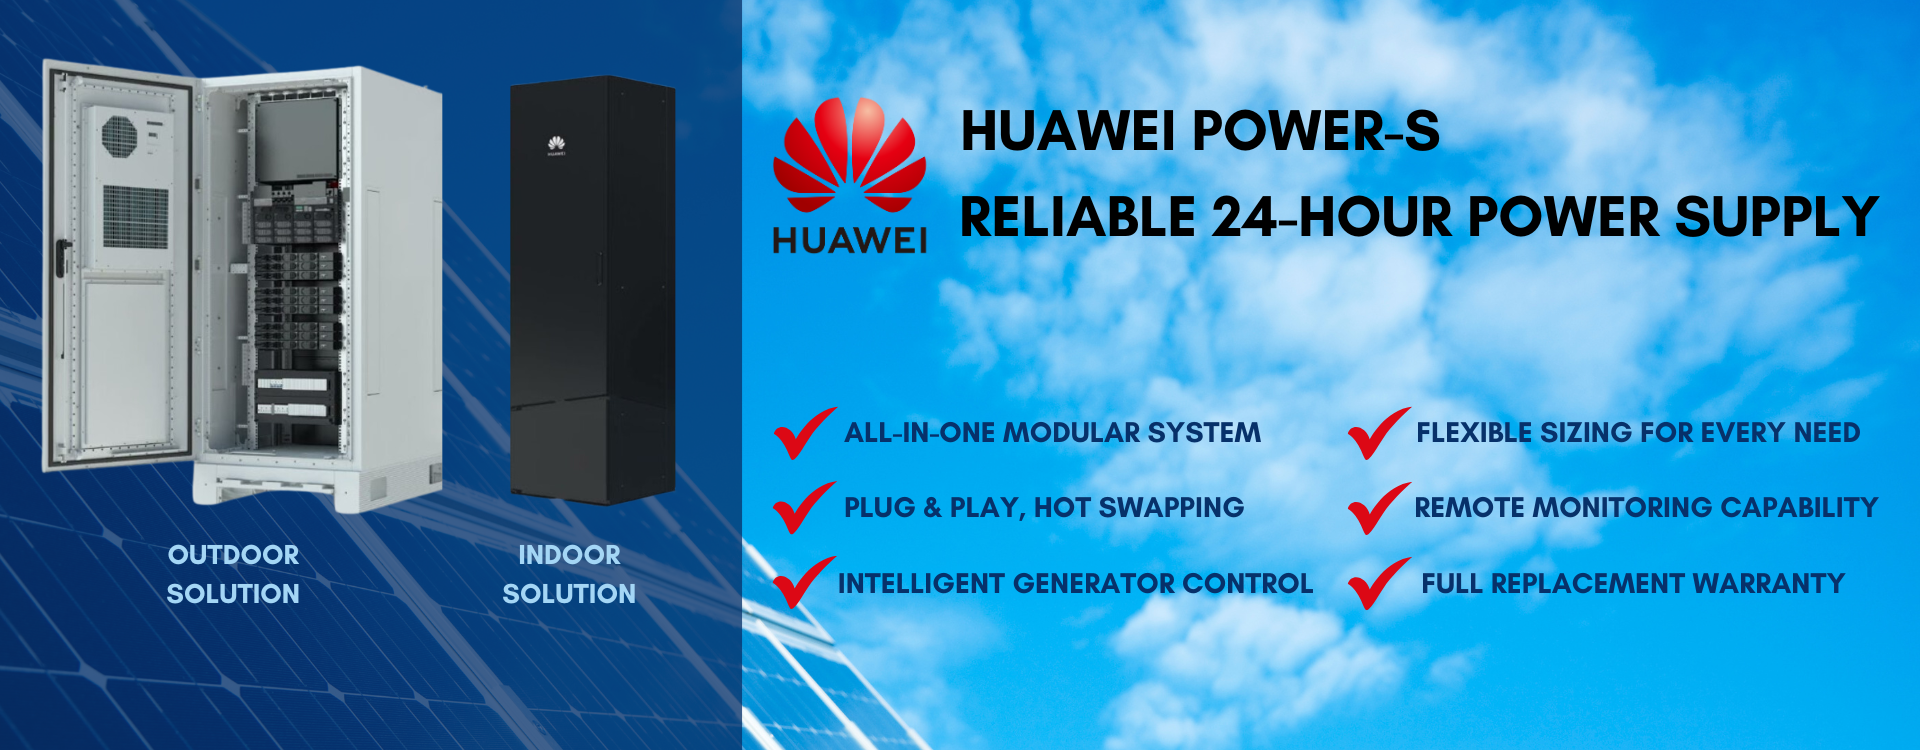 Huawei Power S Banner